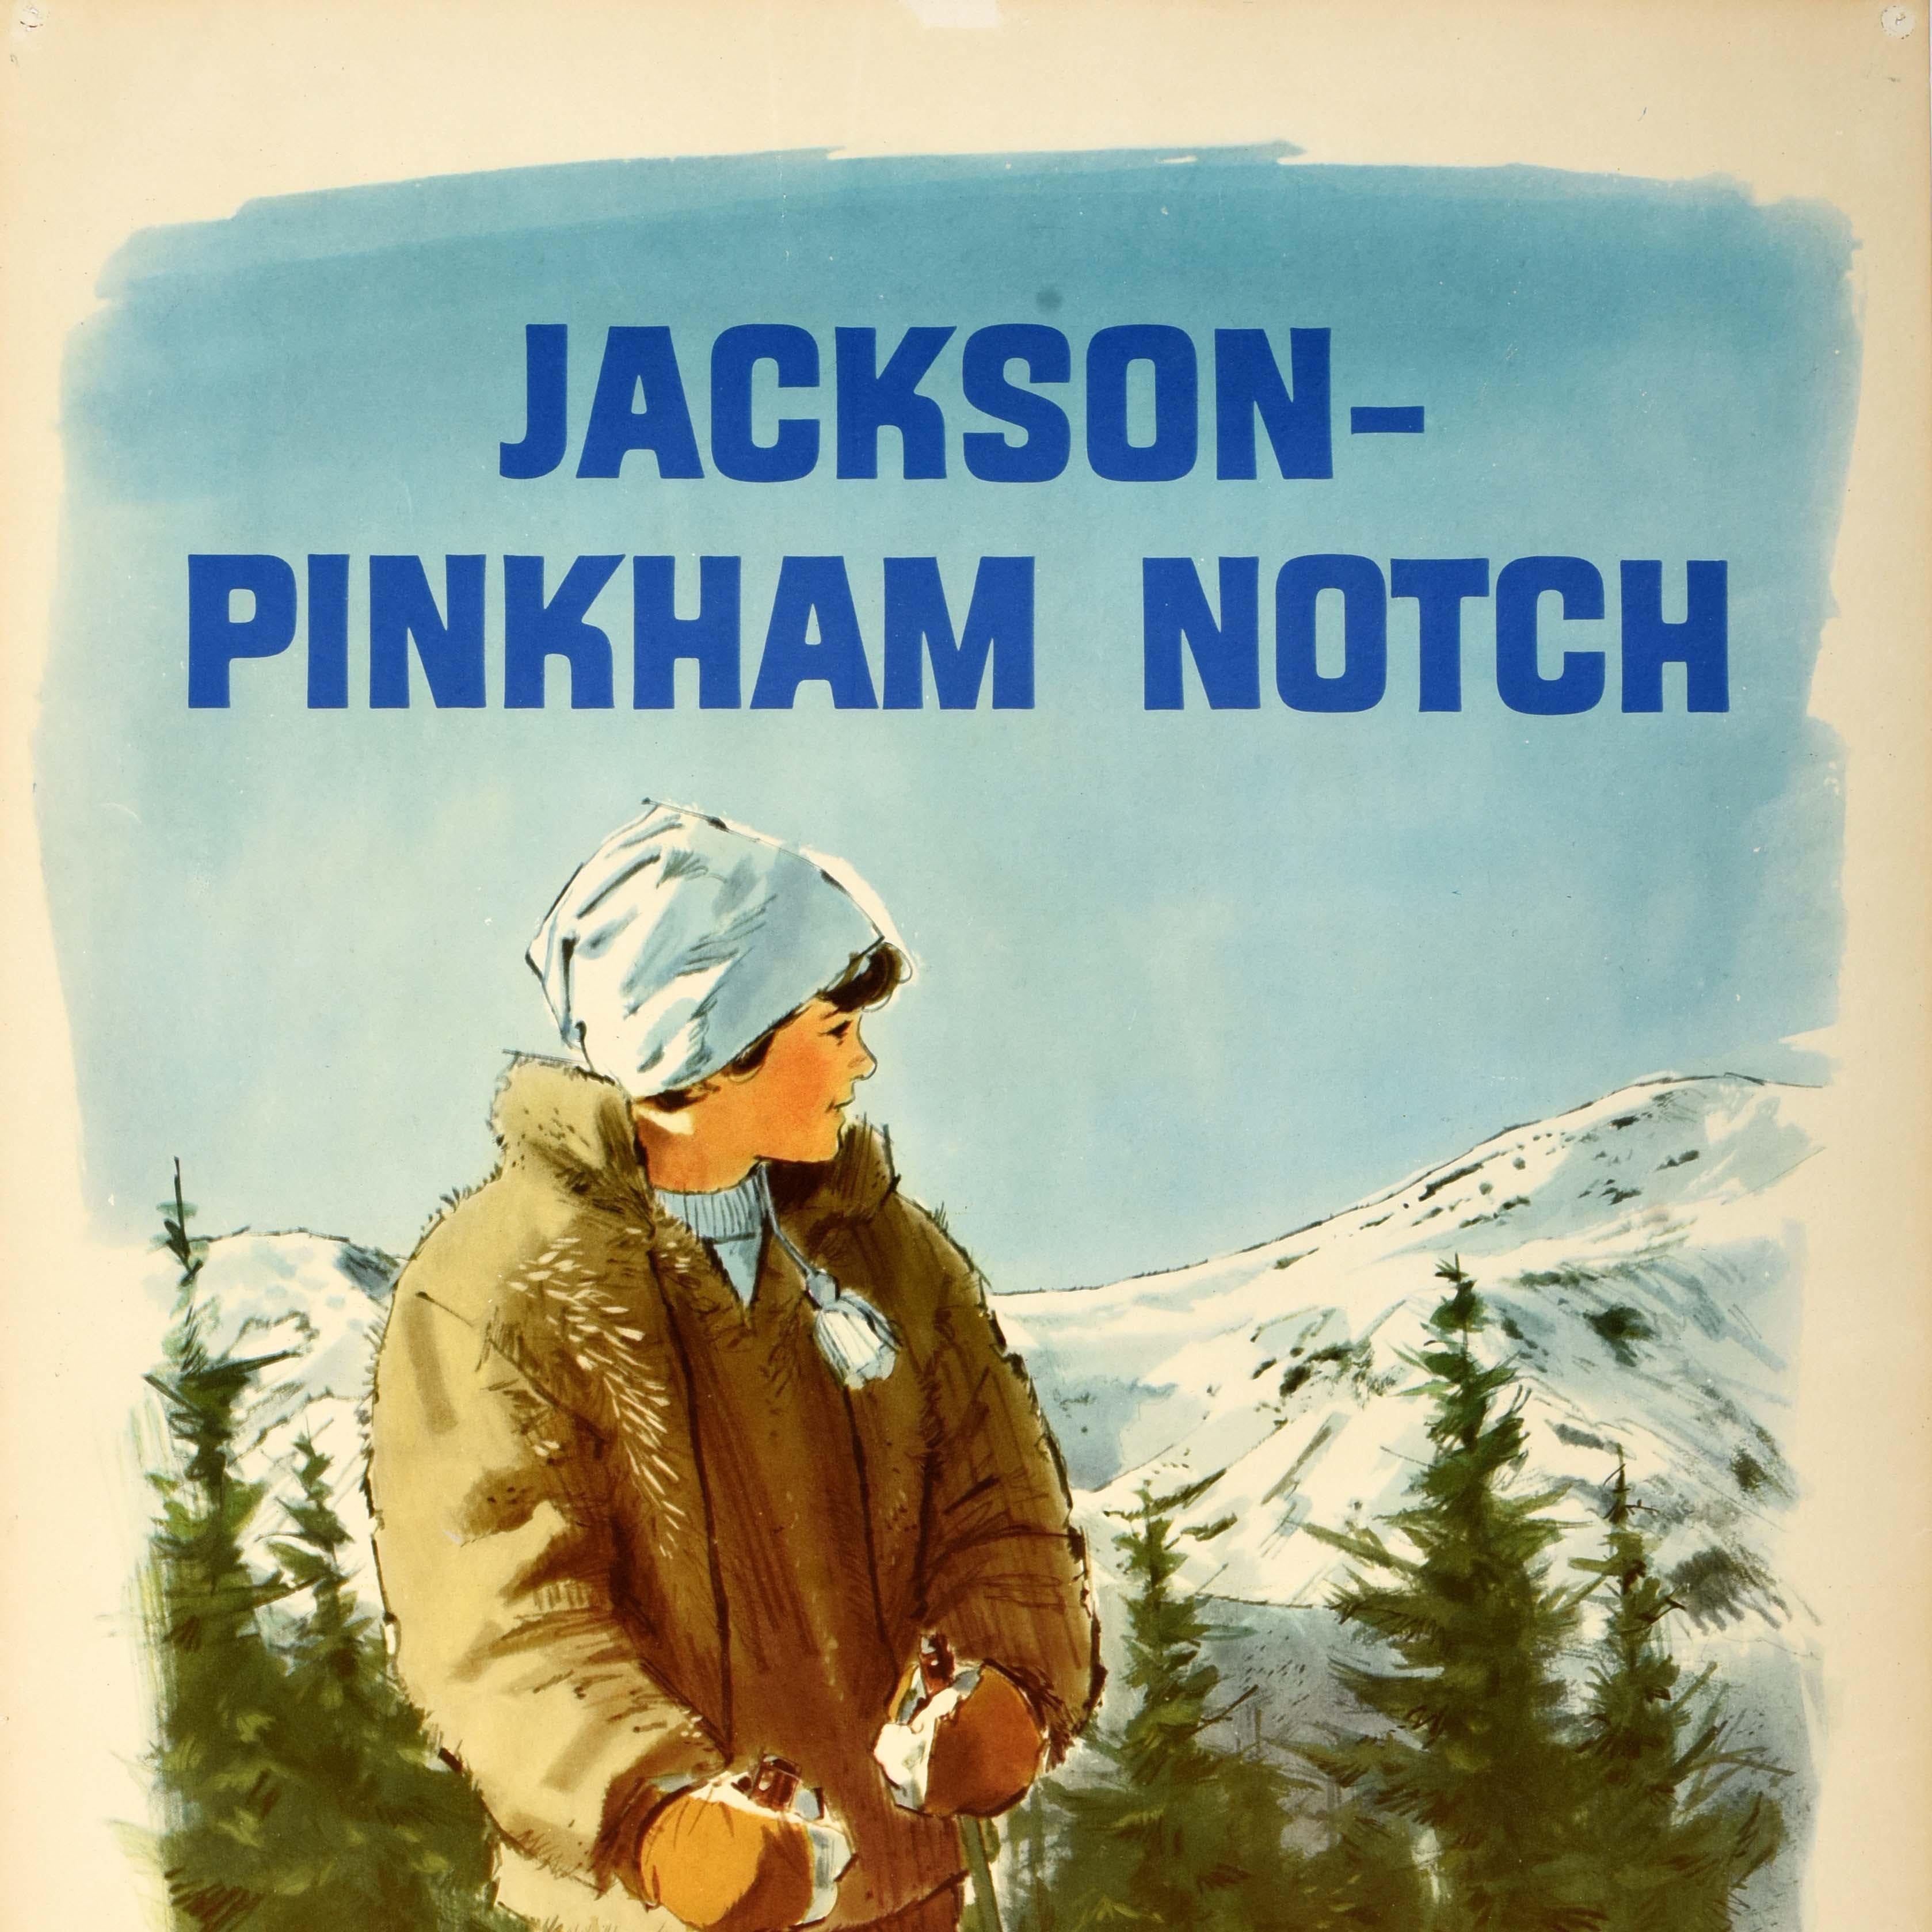 American Original Vintage Winter Sport Travel Poster Jackson Pinkham Notch New Hampshire For Sale